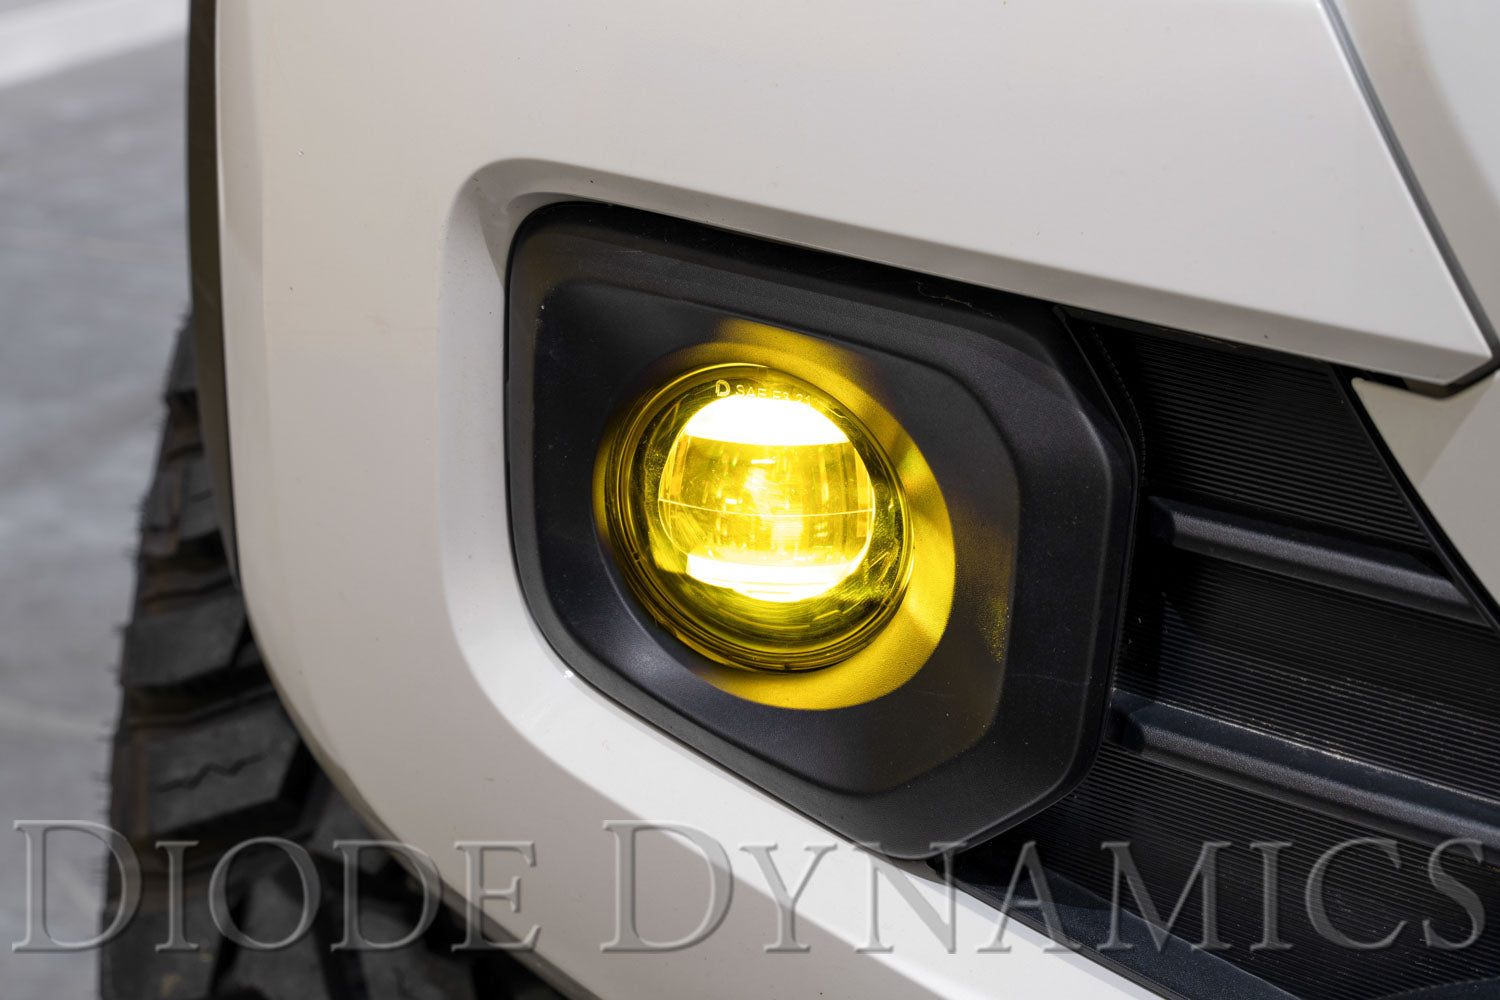 Elite Series Fog Lamps for 2010-2012 Lexus HS250h (pair)-